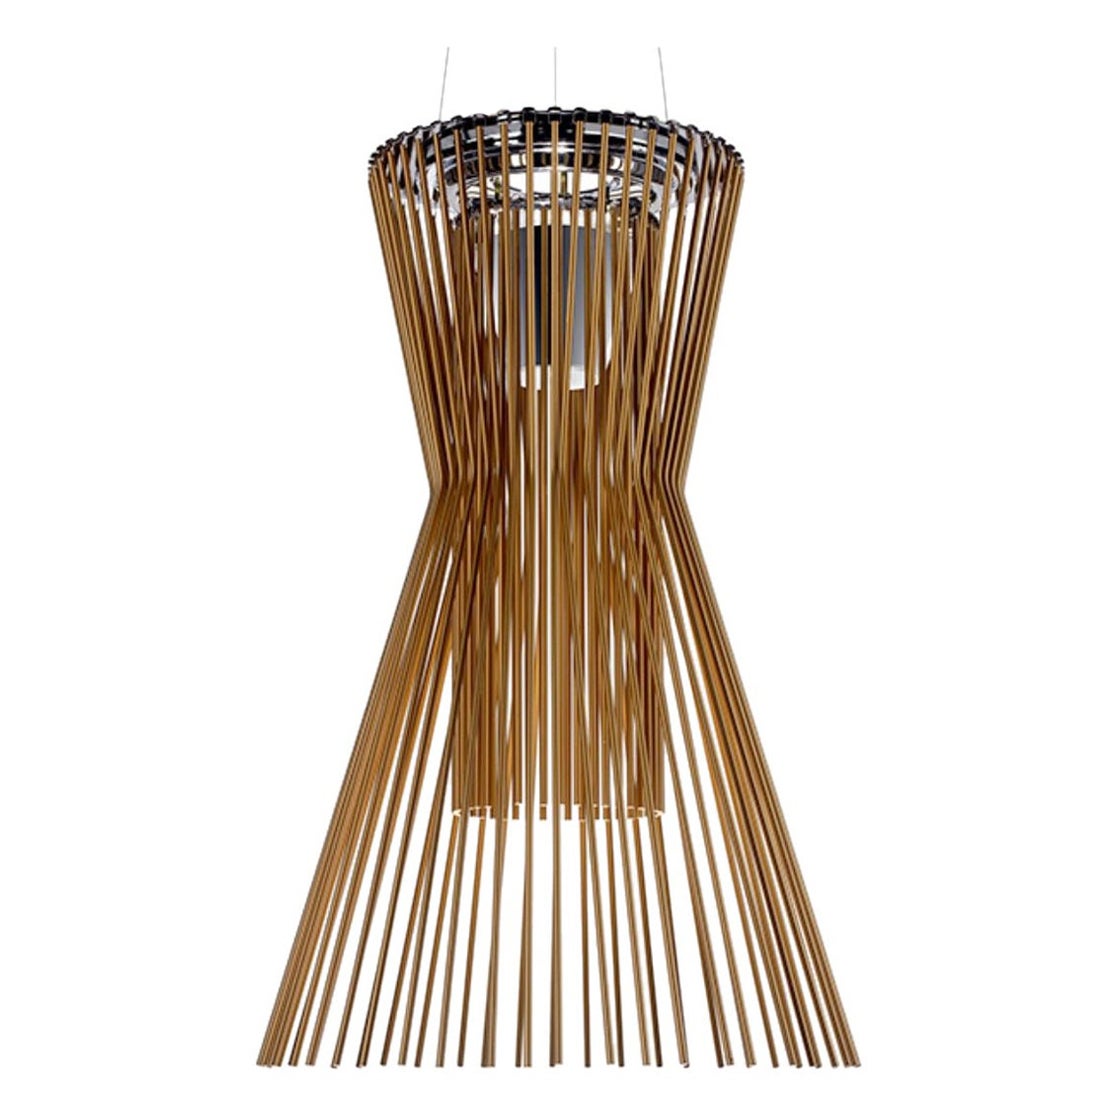 Atelier Oi ‘Allegro Vivace’ LED Chandelier Lamp in Copper for Foscarini For Sale